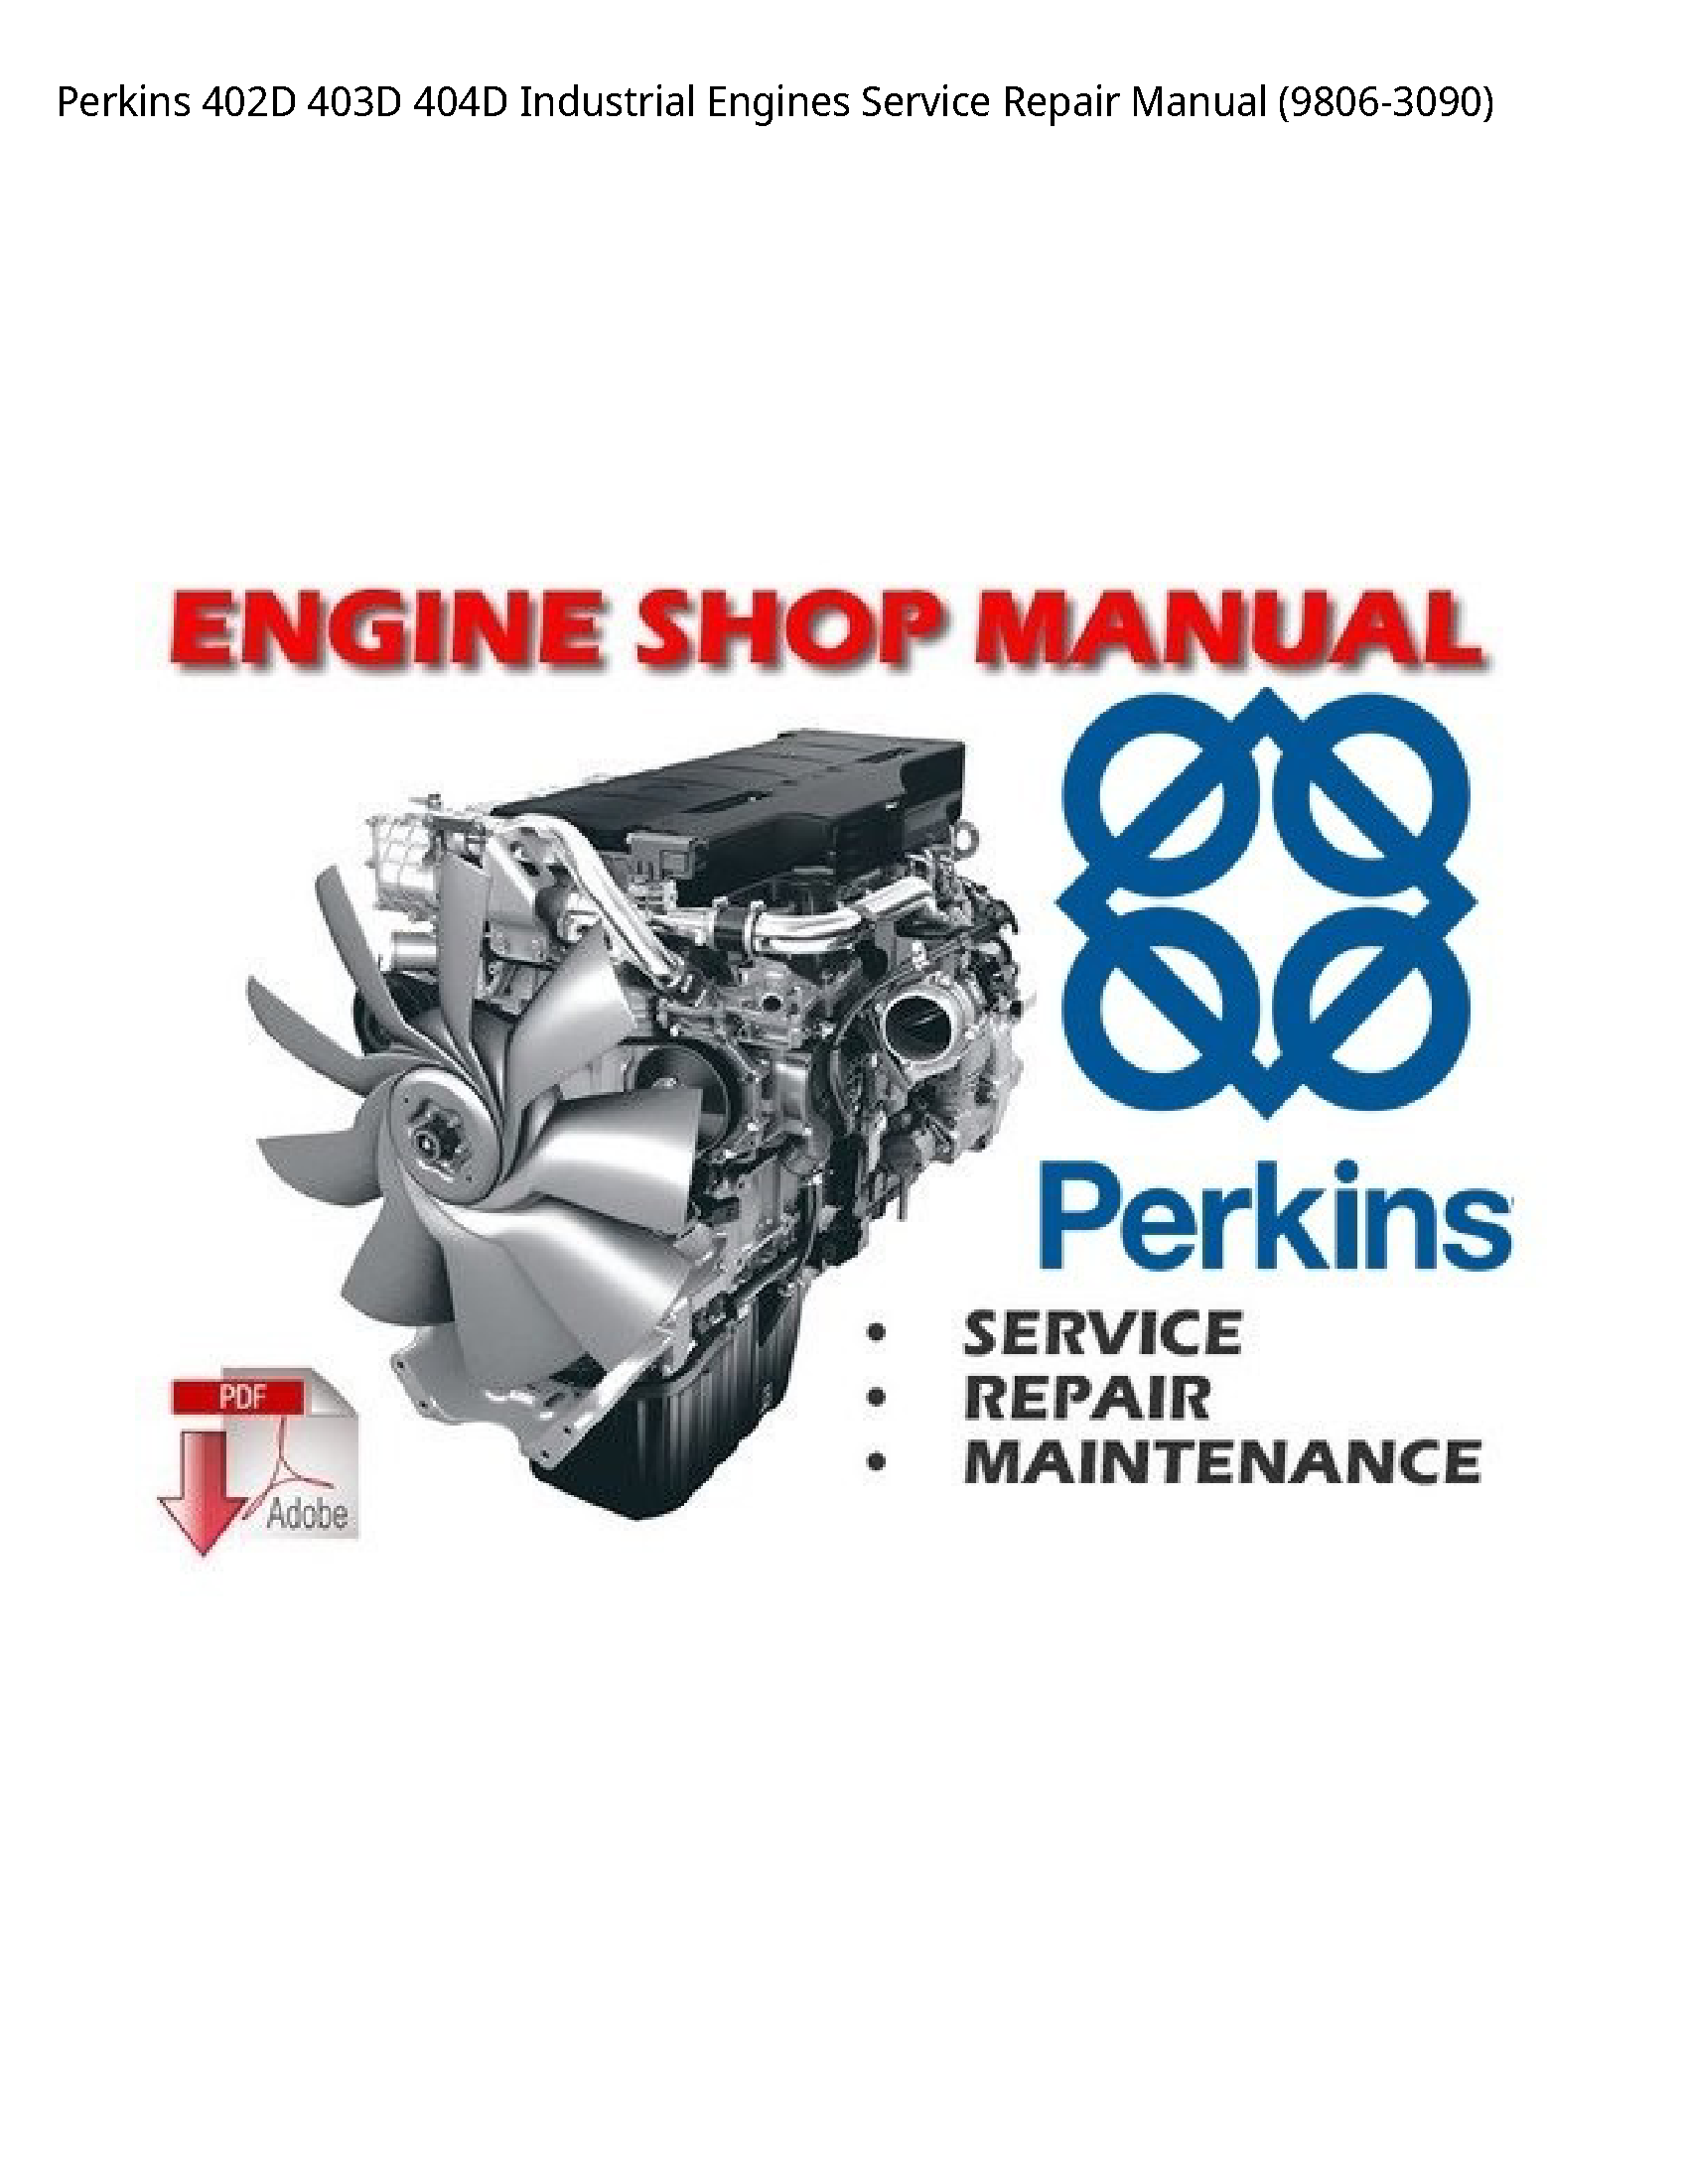 Perkins 402D Industrial Engines manual